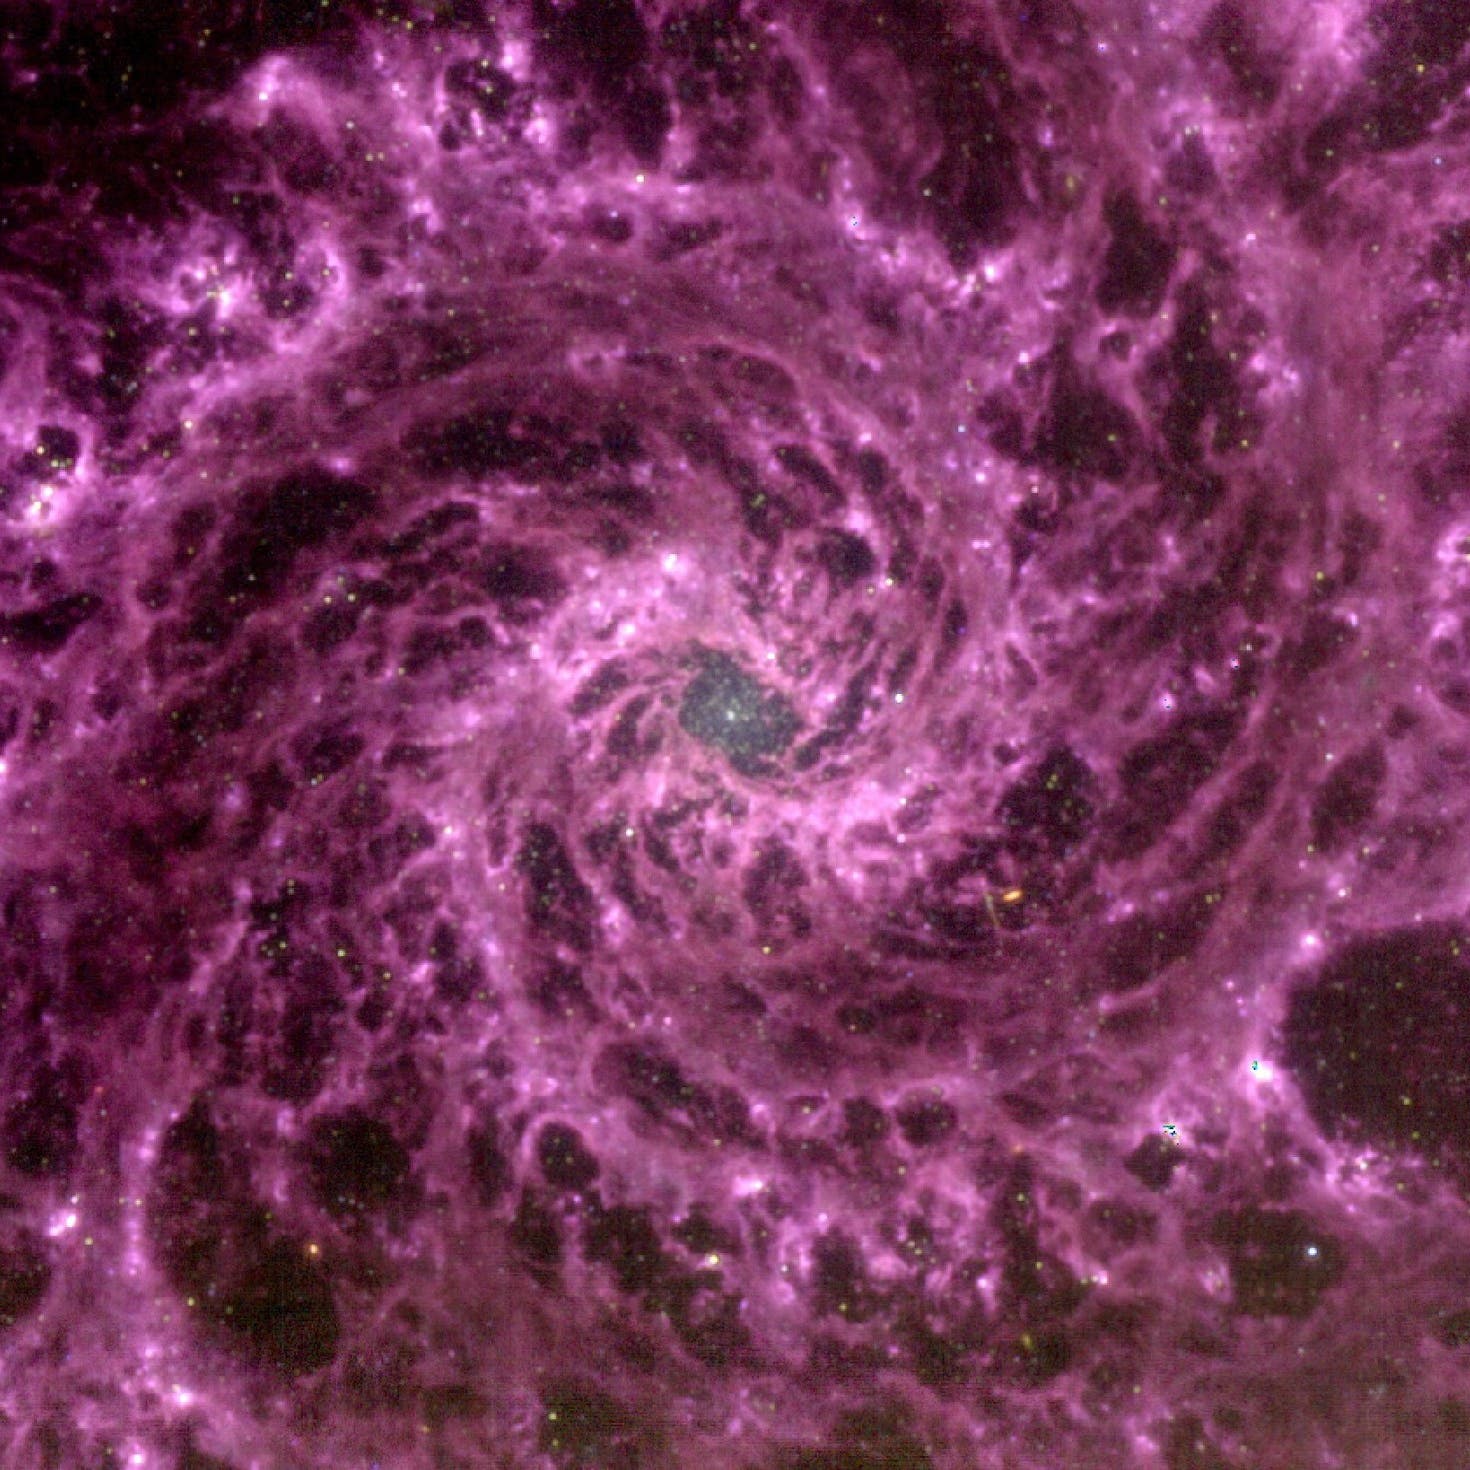 ‘Truly spectacular’: NASA’s James Webb telescope captures purple spiral galaxy